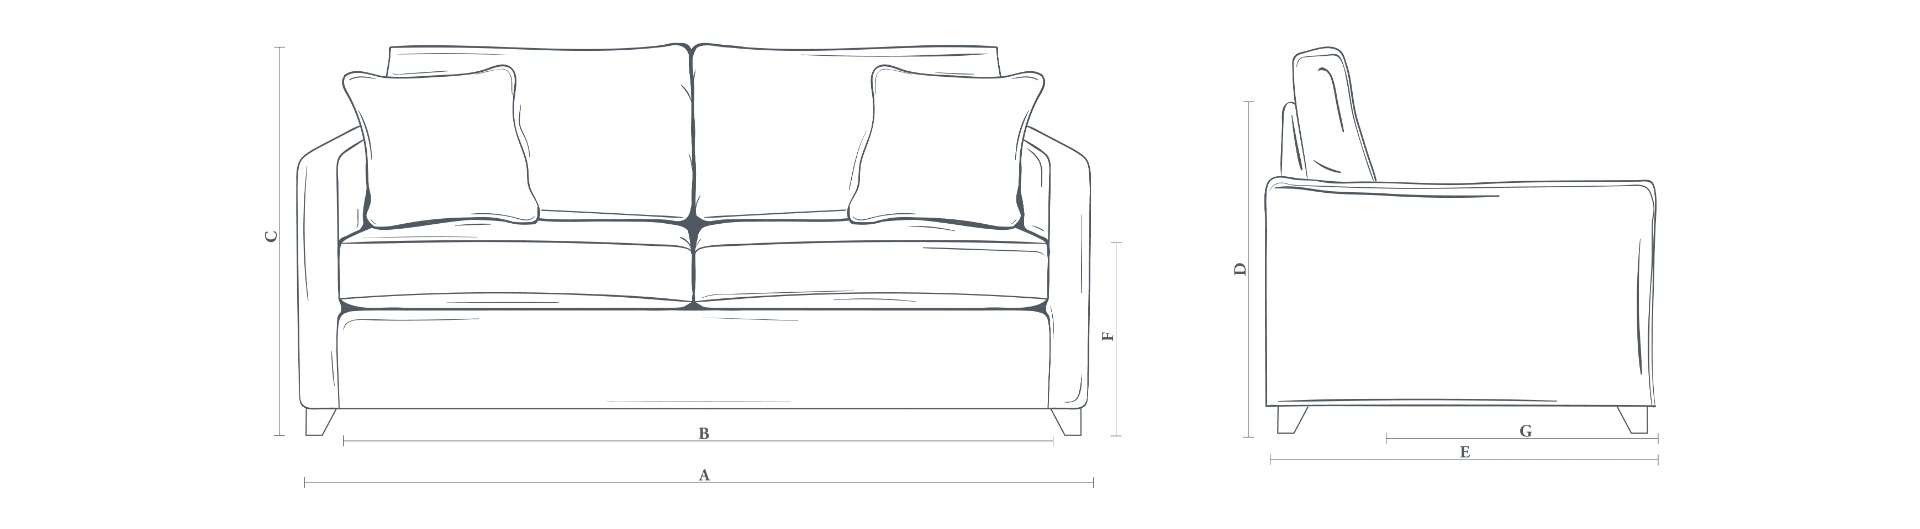 The Foxham Sofa 3.5 Seater